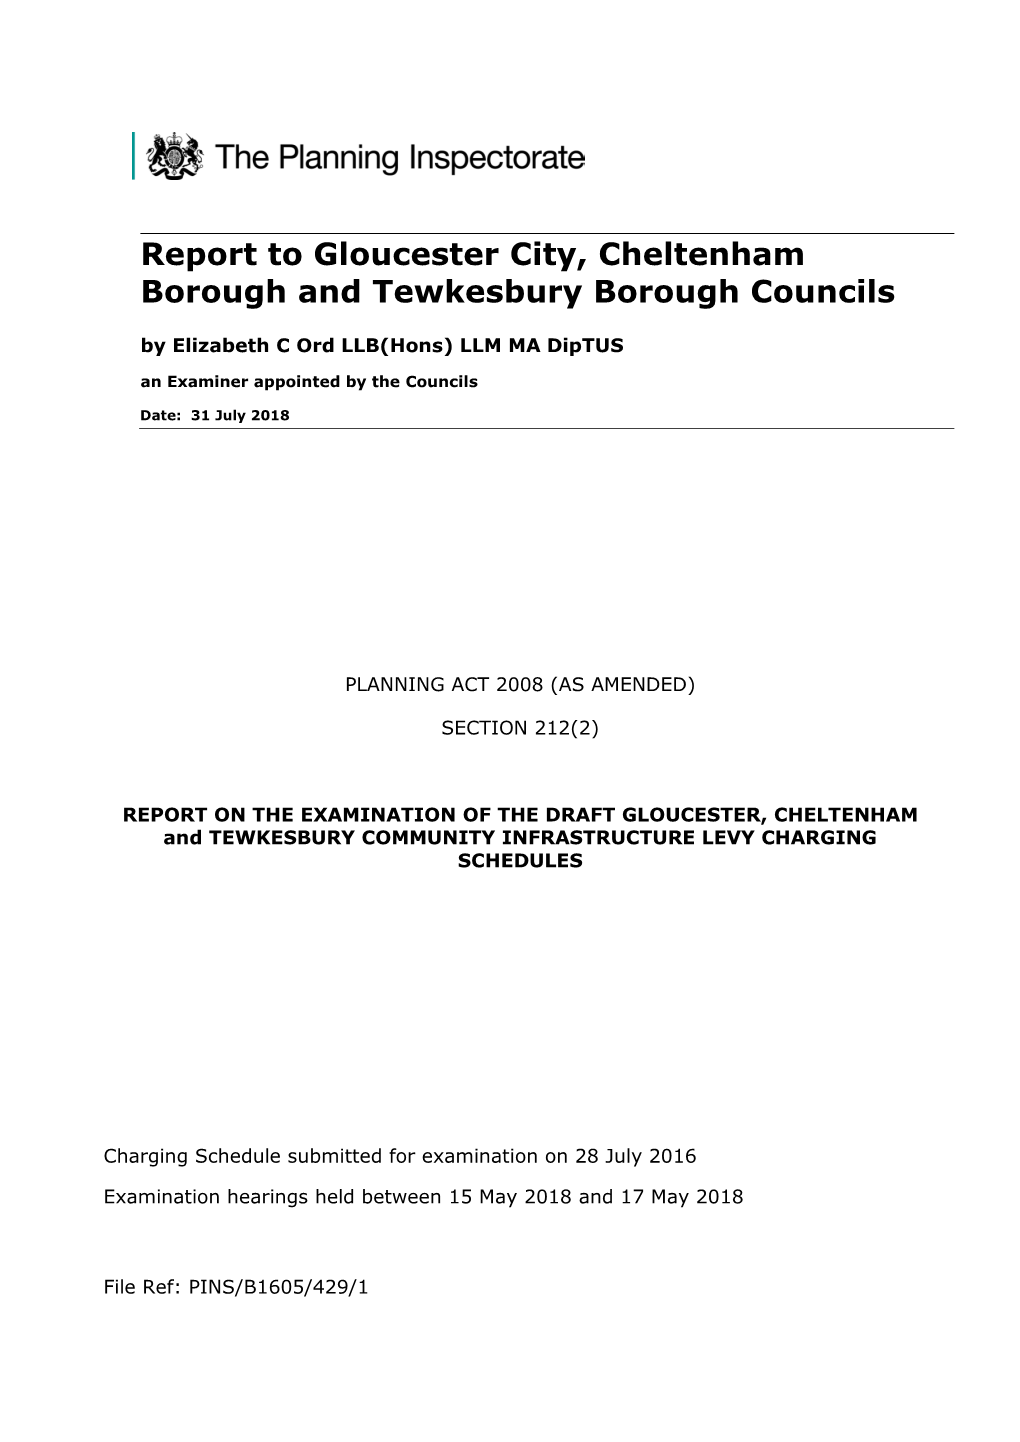 Report to Gloucester City, Cheltenham Borough and Tewkesbury Borough Councils